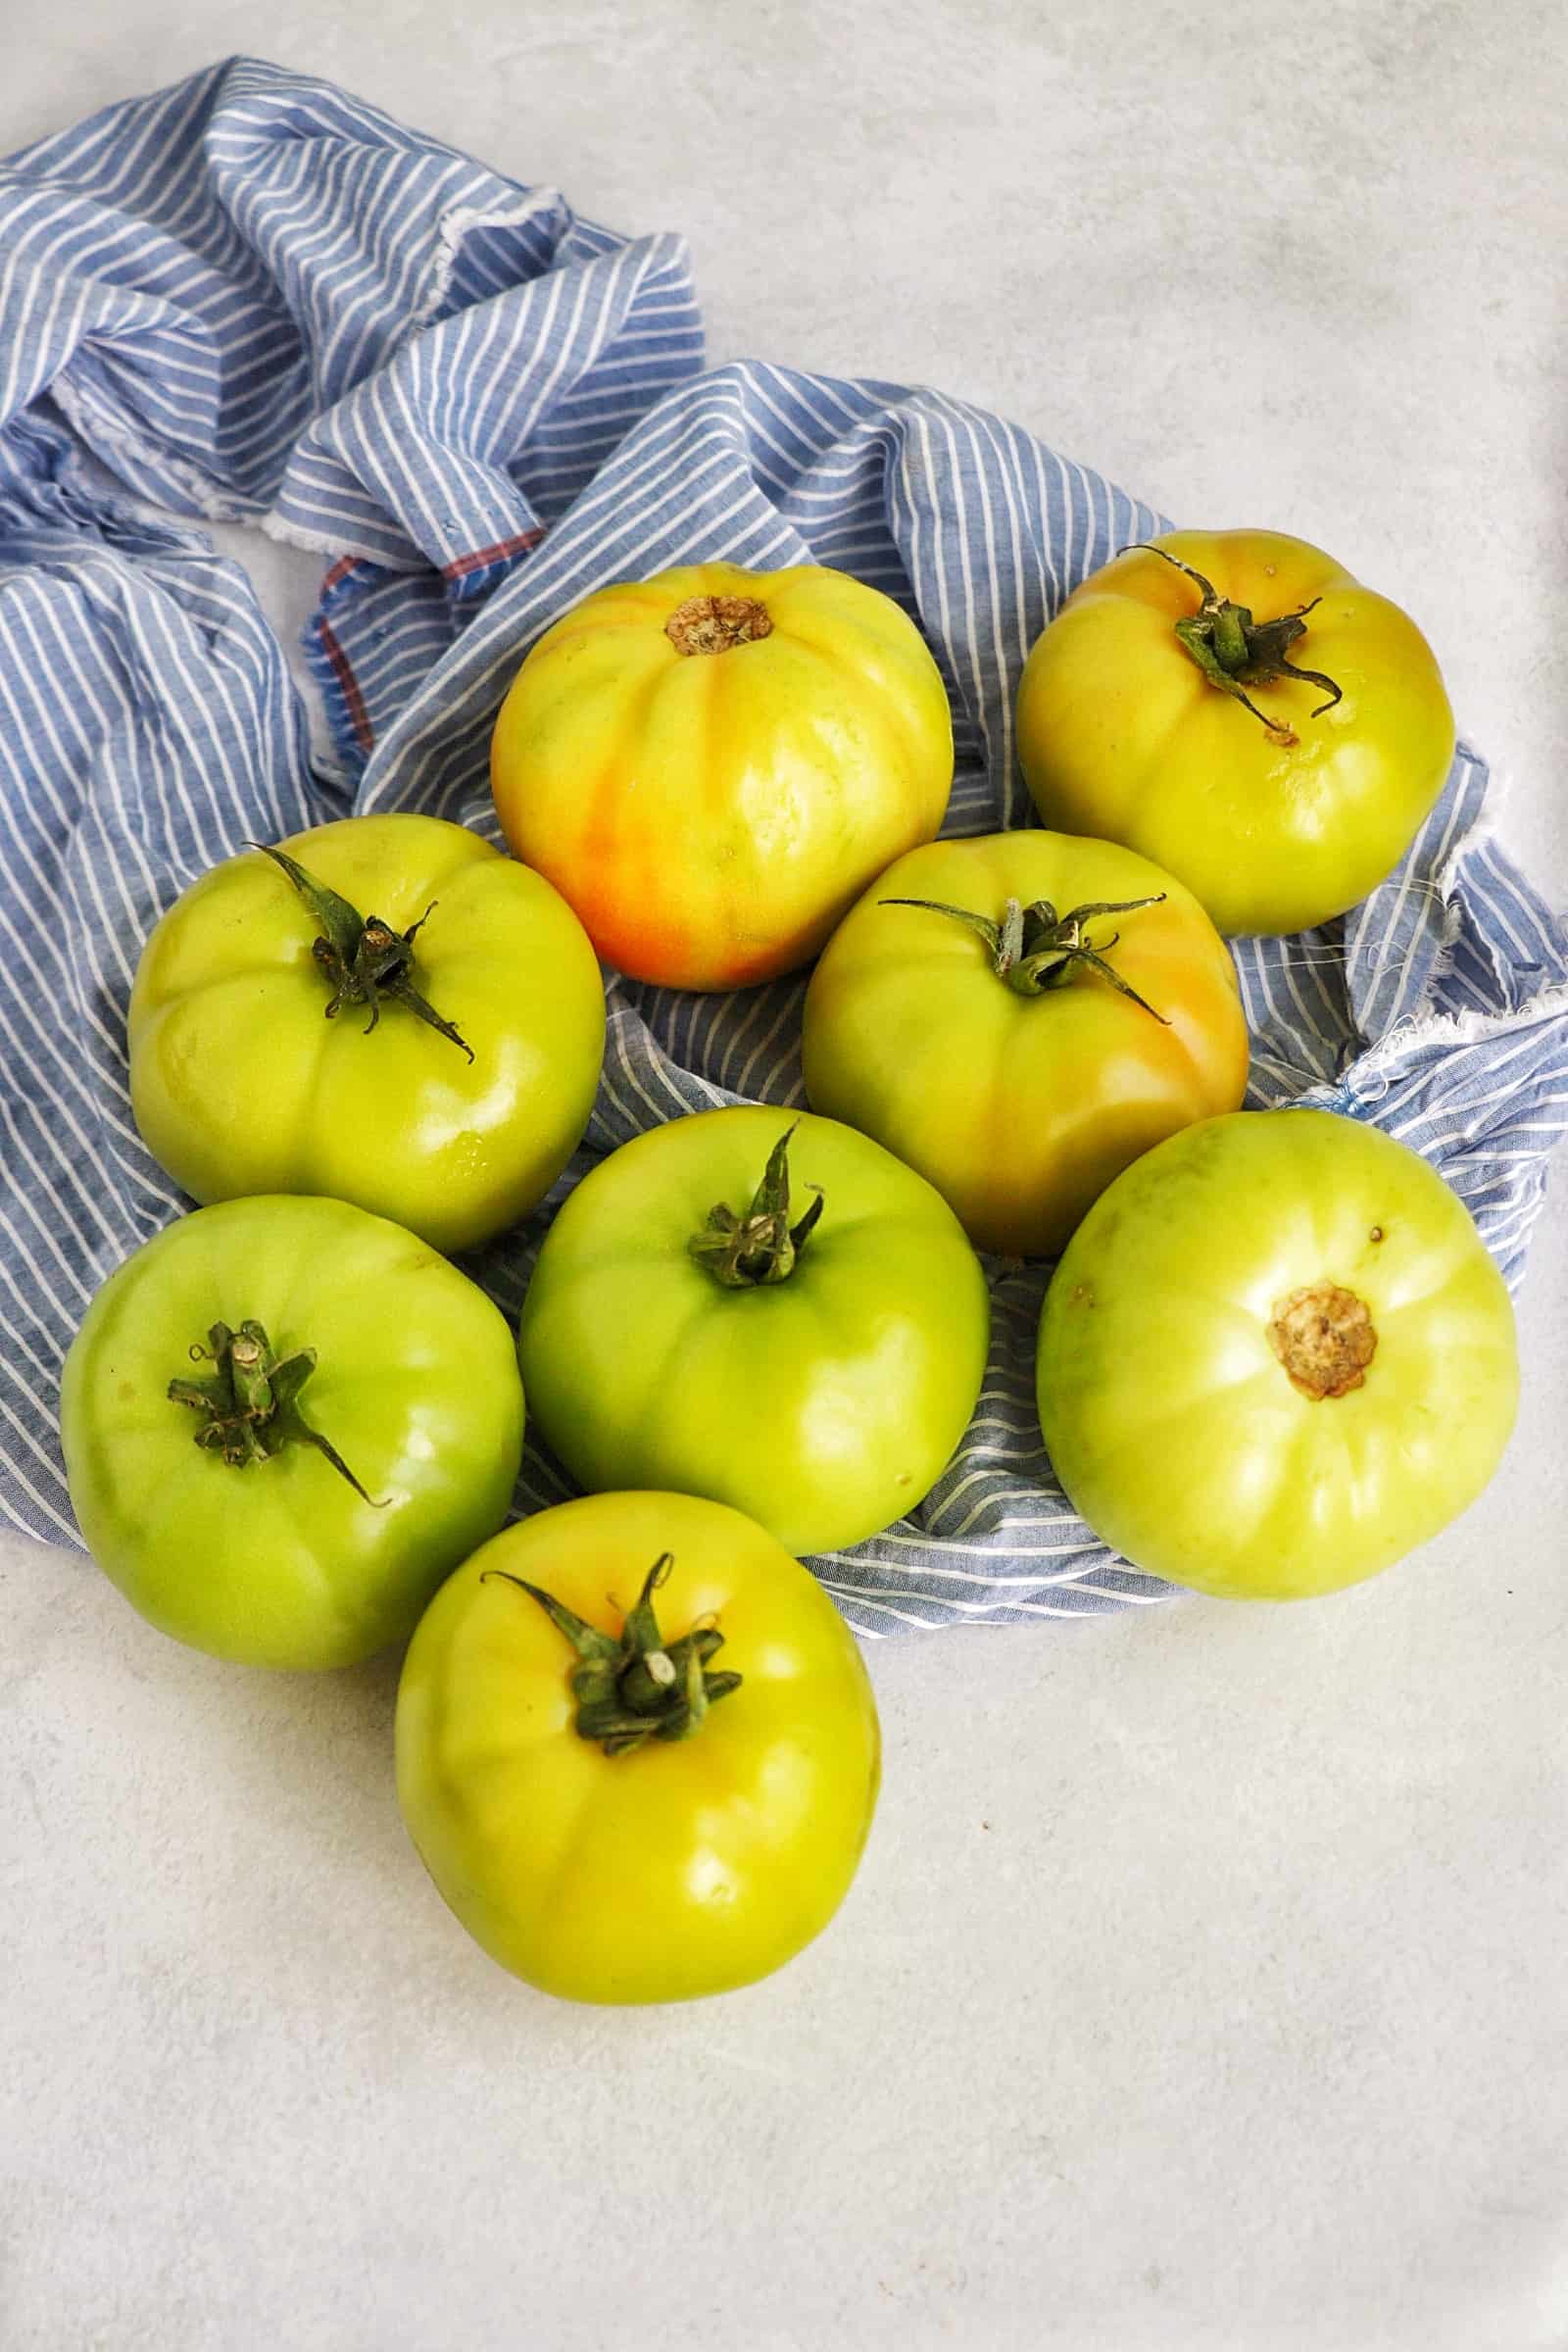 Raw green tomatoes